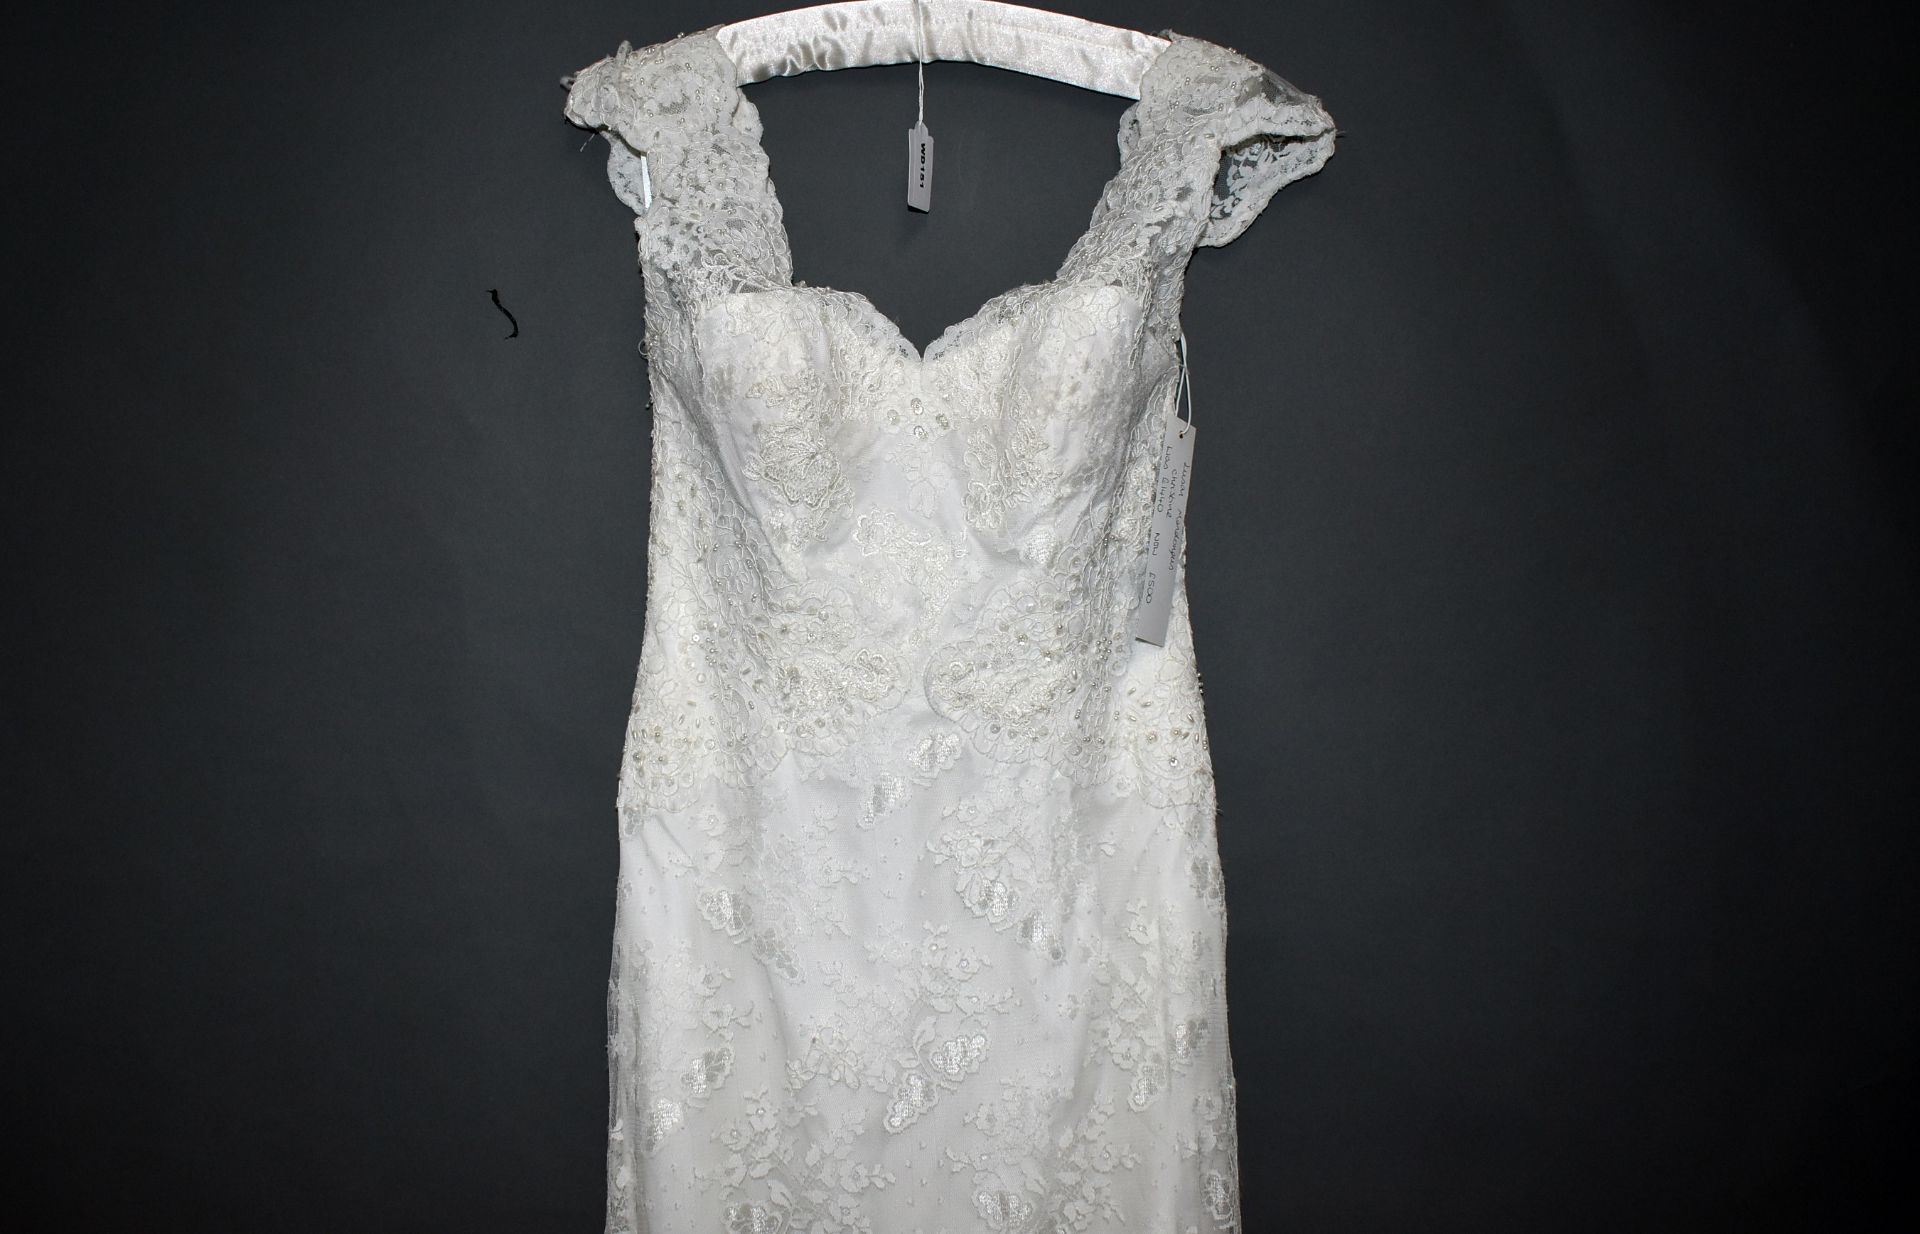 1 x LUSAN MANDONGUS Lace Overlay Fishtail Designer Wedding Dress Bridal Gown RRP £1,440 UK 12 - Image 2 of 6